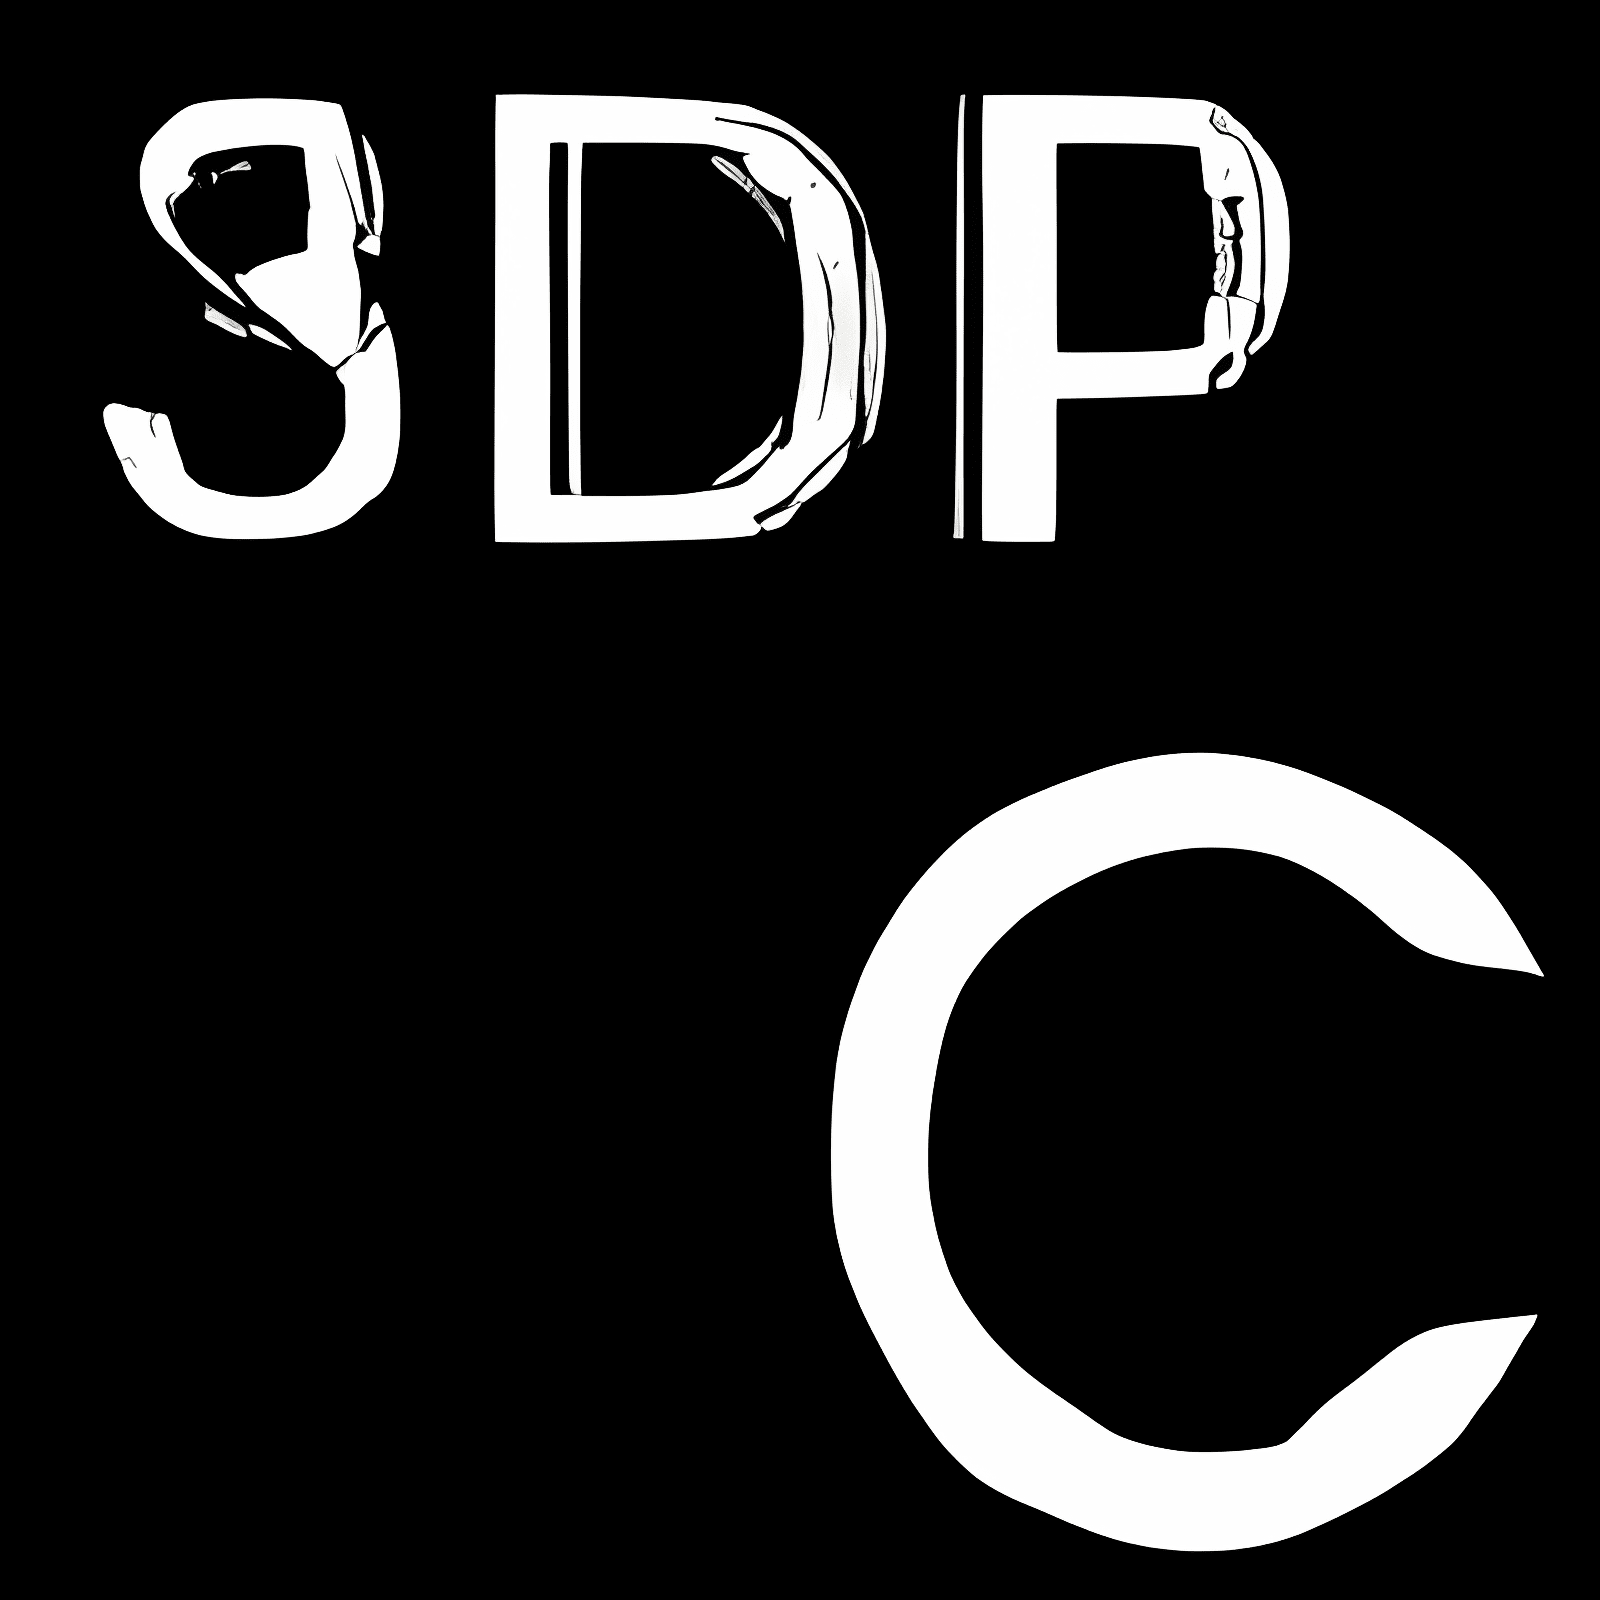 for mac download 3DP Chip 23.07